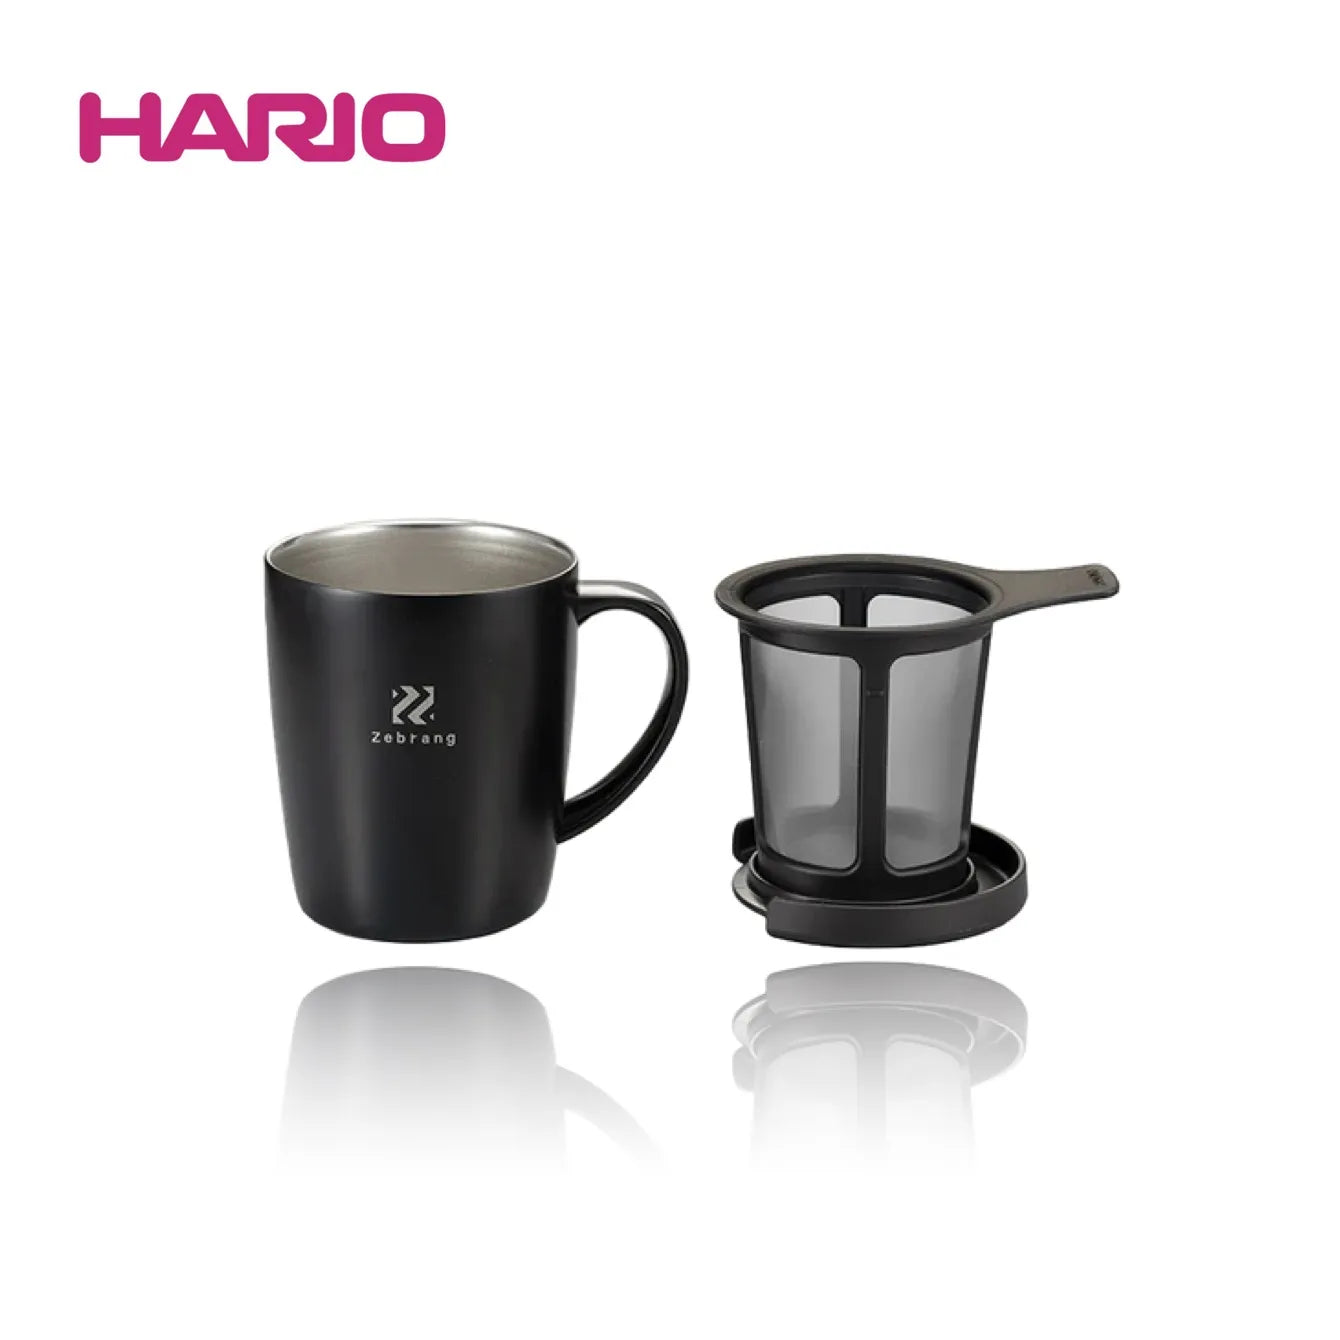 Hario's Coffee Mugs